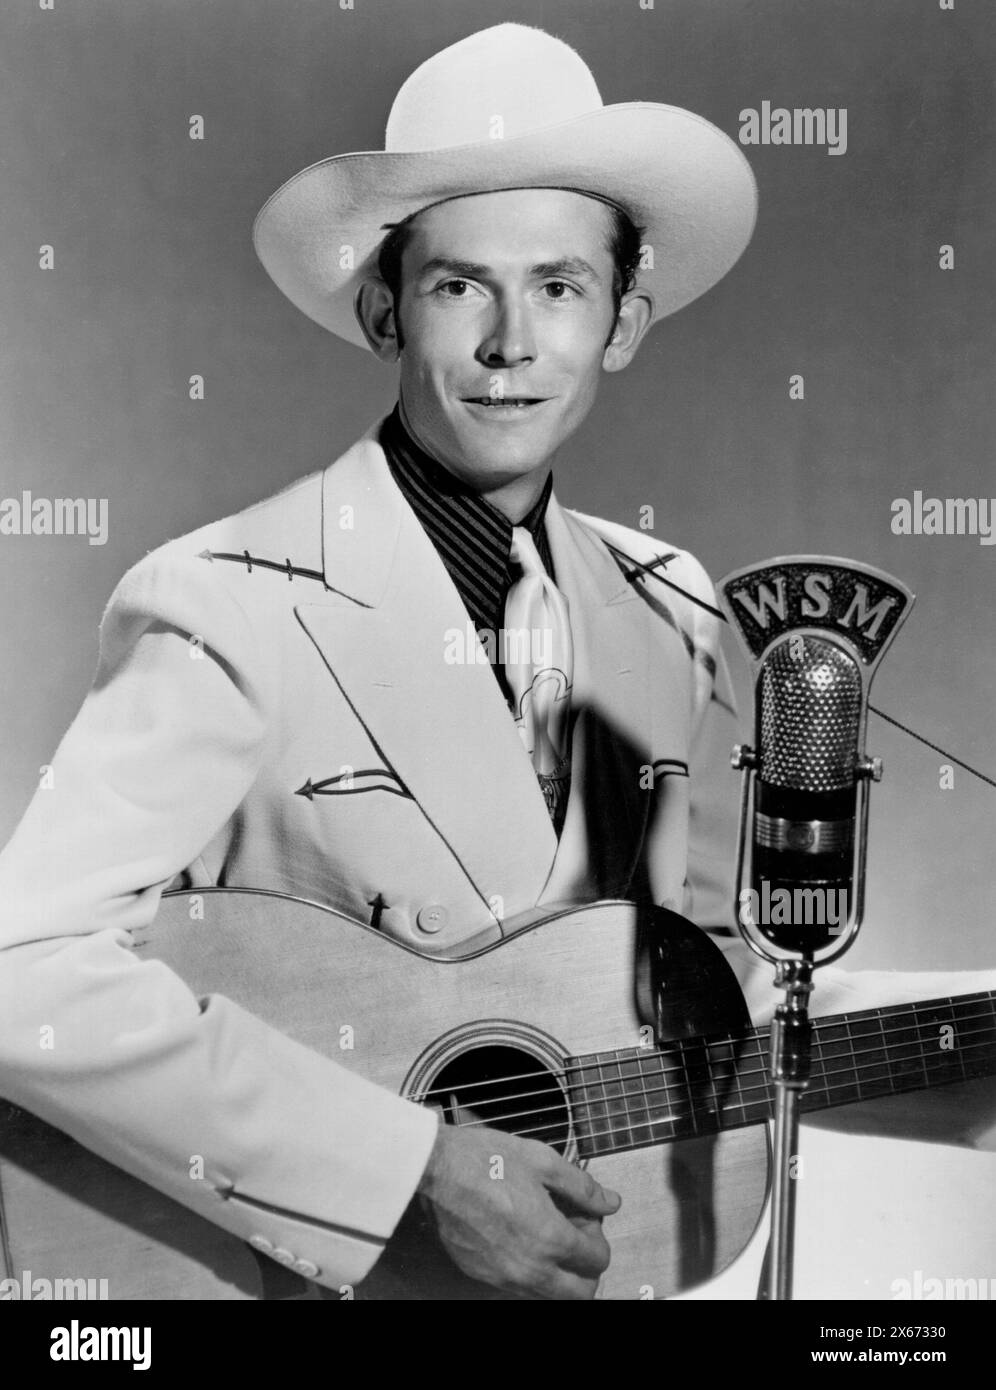 Hank Williams - Promotional photograph - 1948 Stock Photo